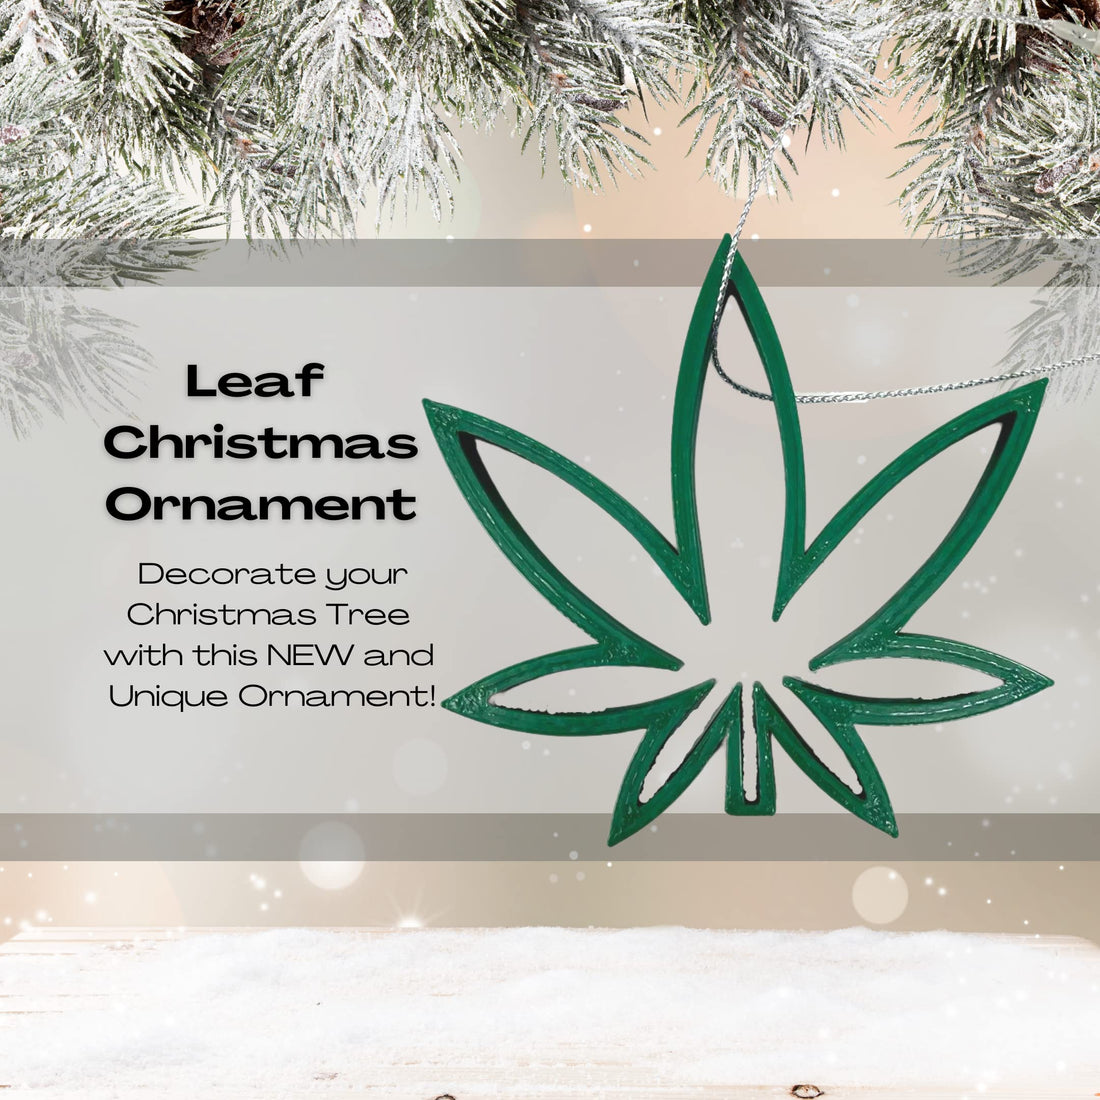 Leaf Christmas Ornament - Decorative Christmas Ornament - Decorative Holiday Ornament - Made in The USA